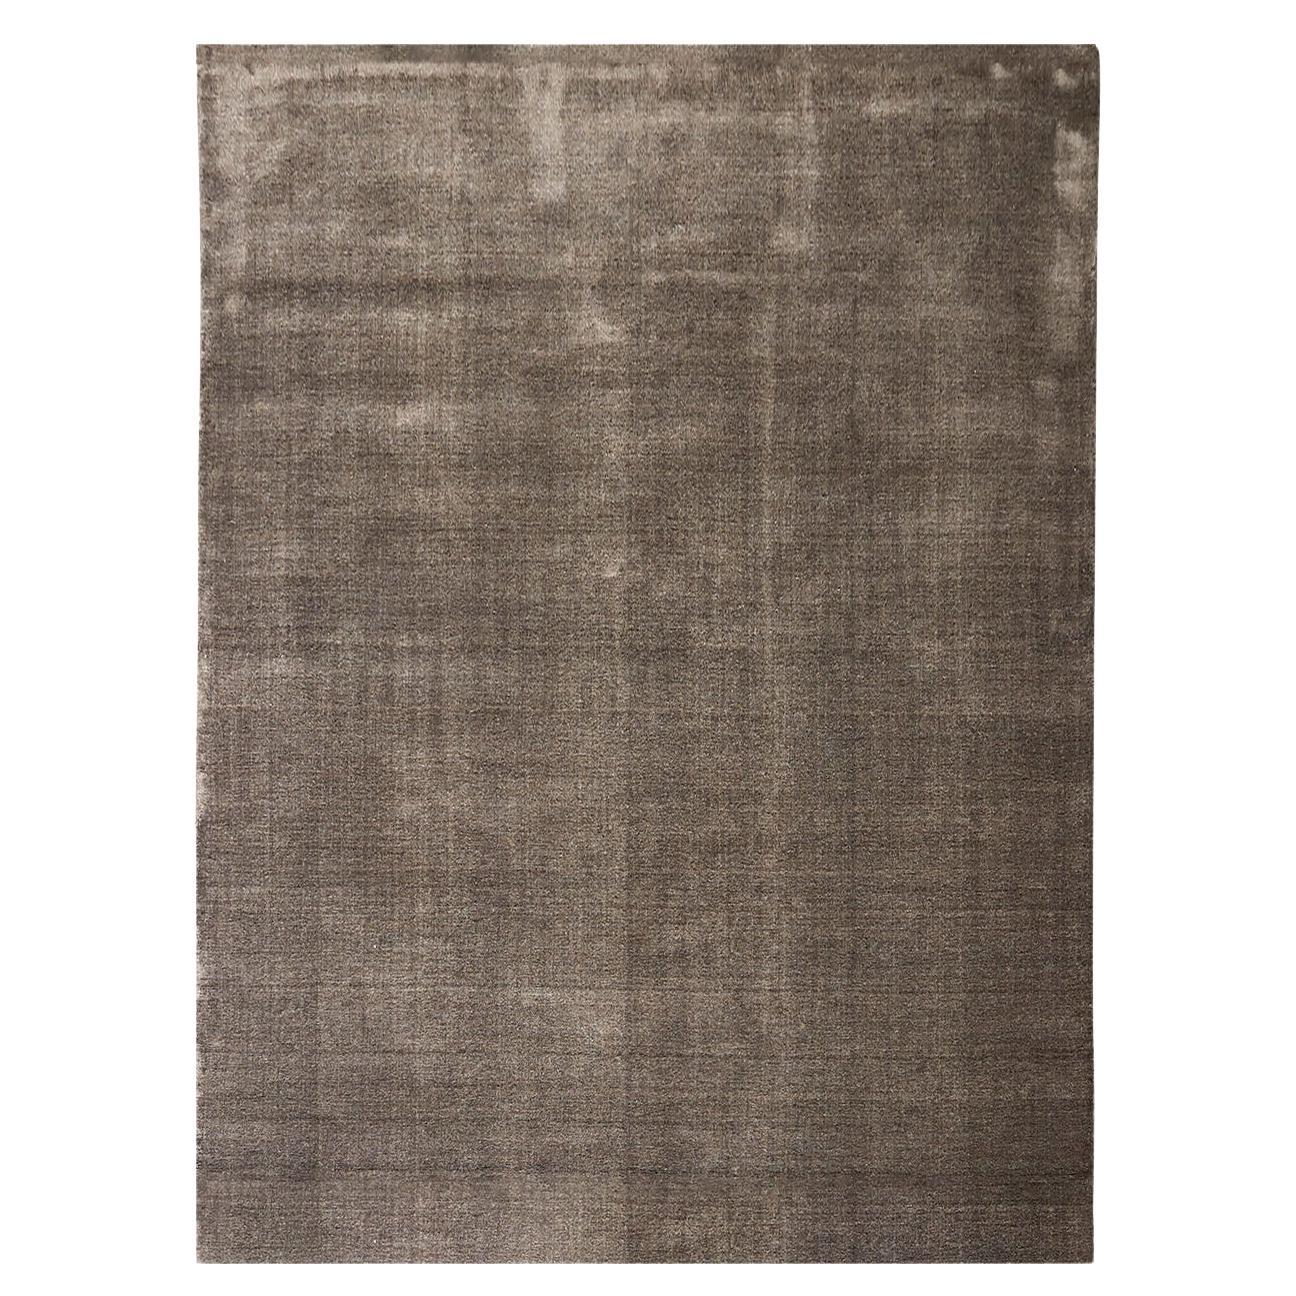 Warm Grey Earth Bamboo Carpet by Massimo Copenhagen